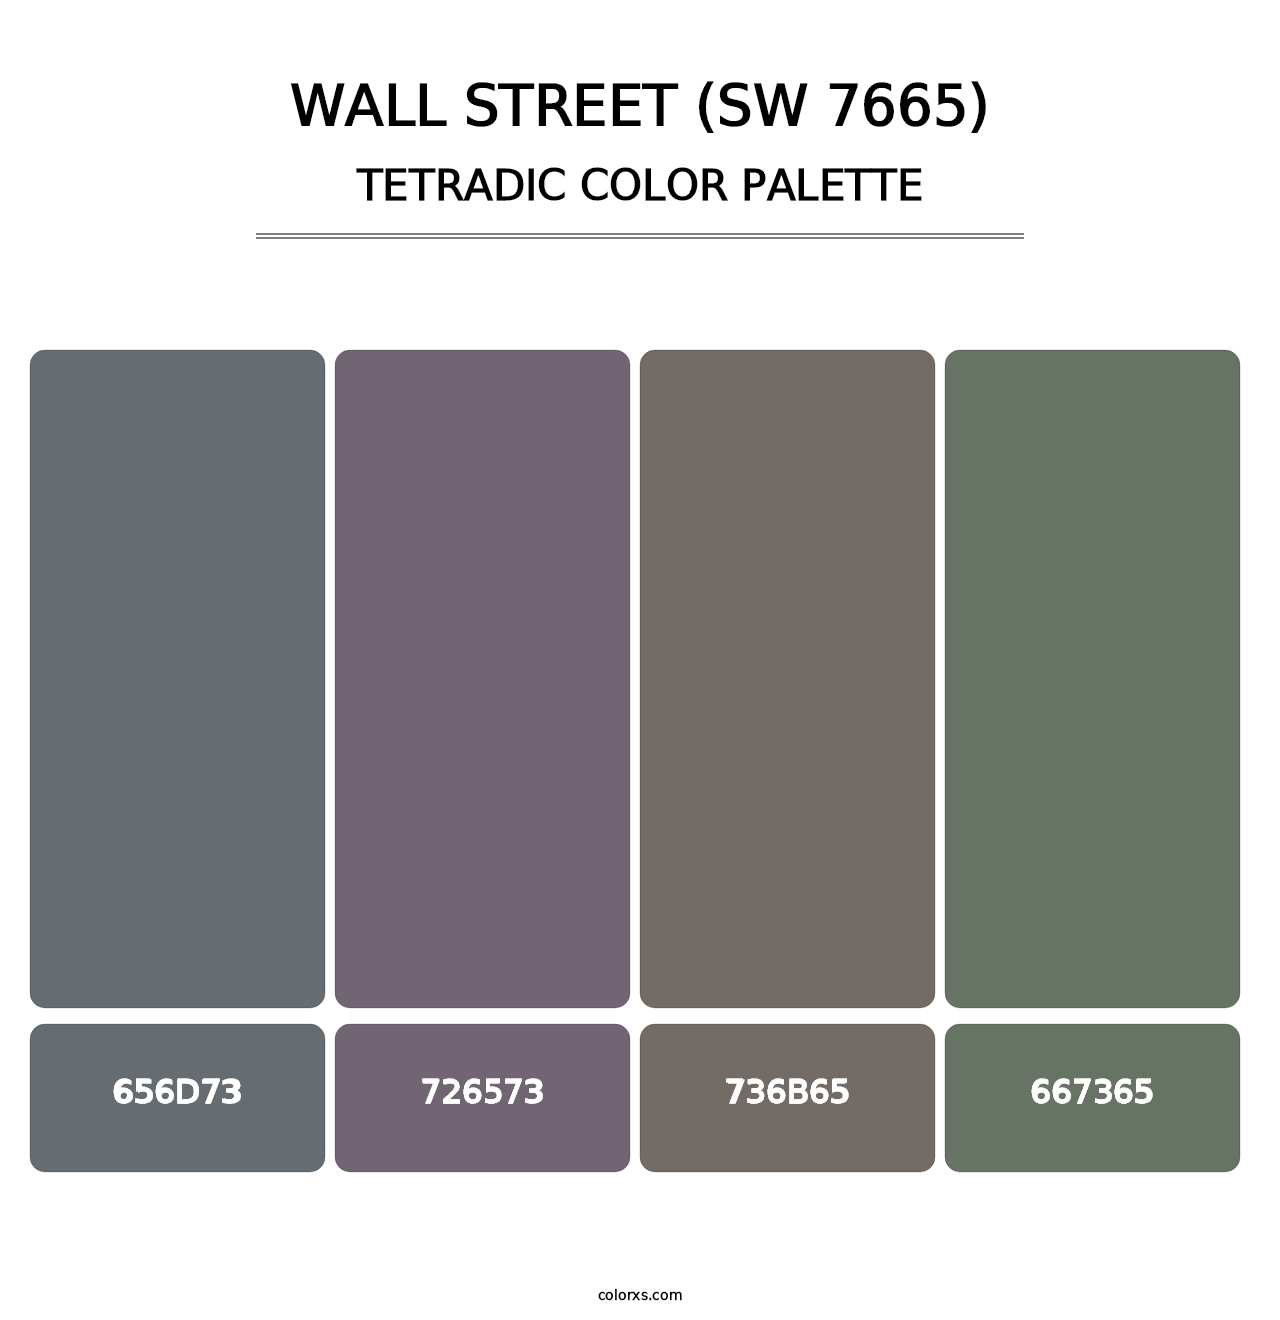 Wall Street (SW 7665) - Tetradic Color Palette